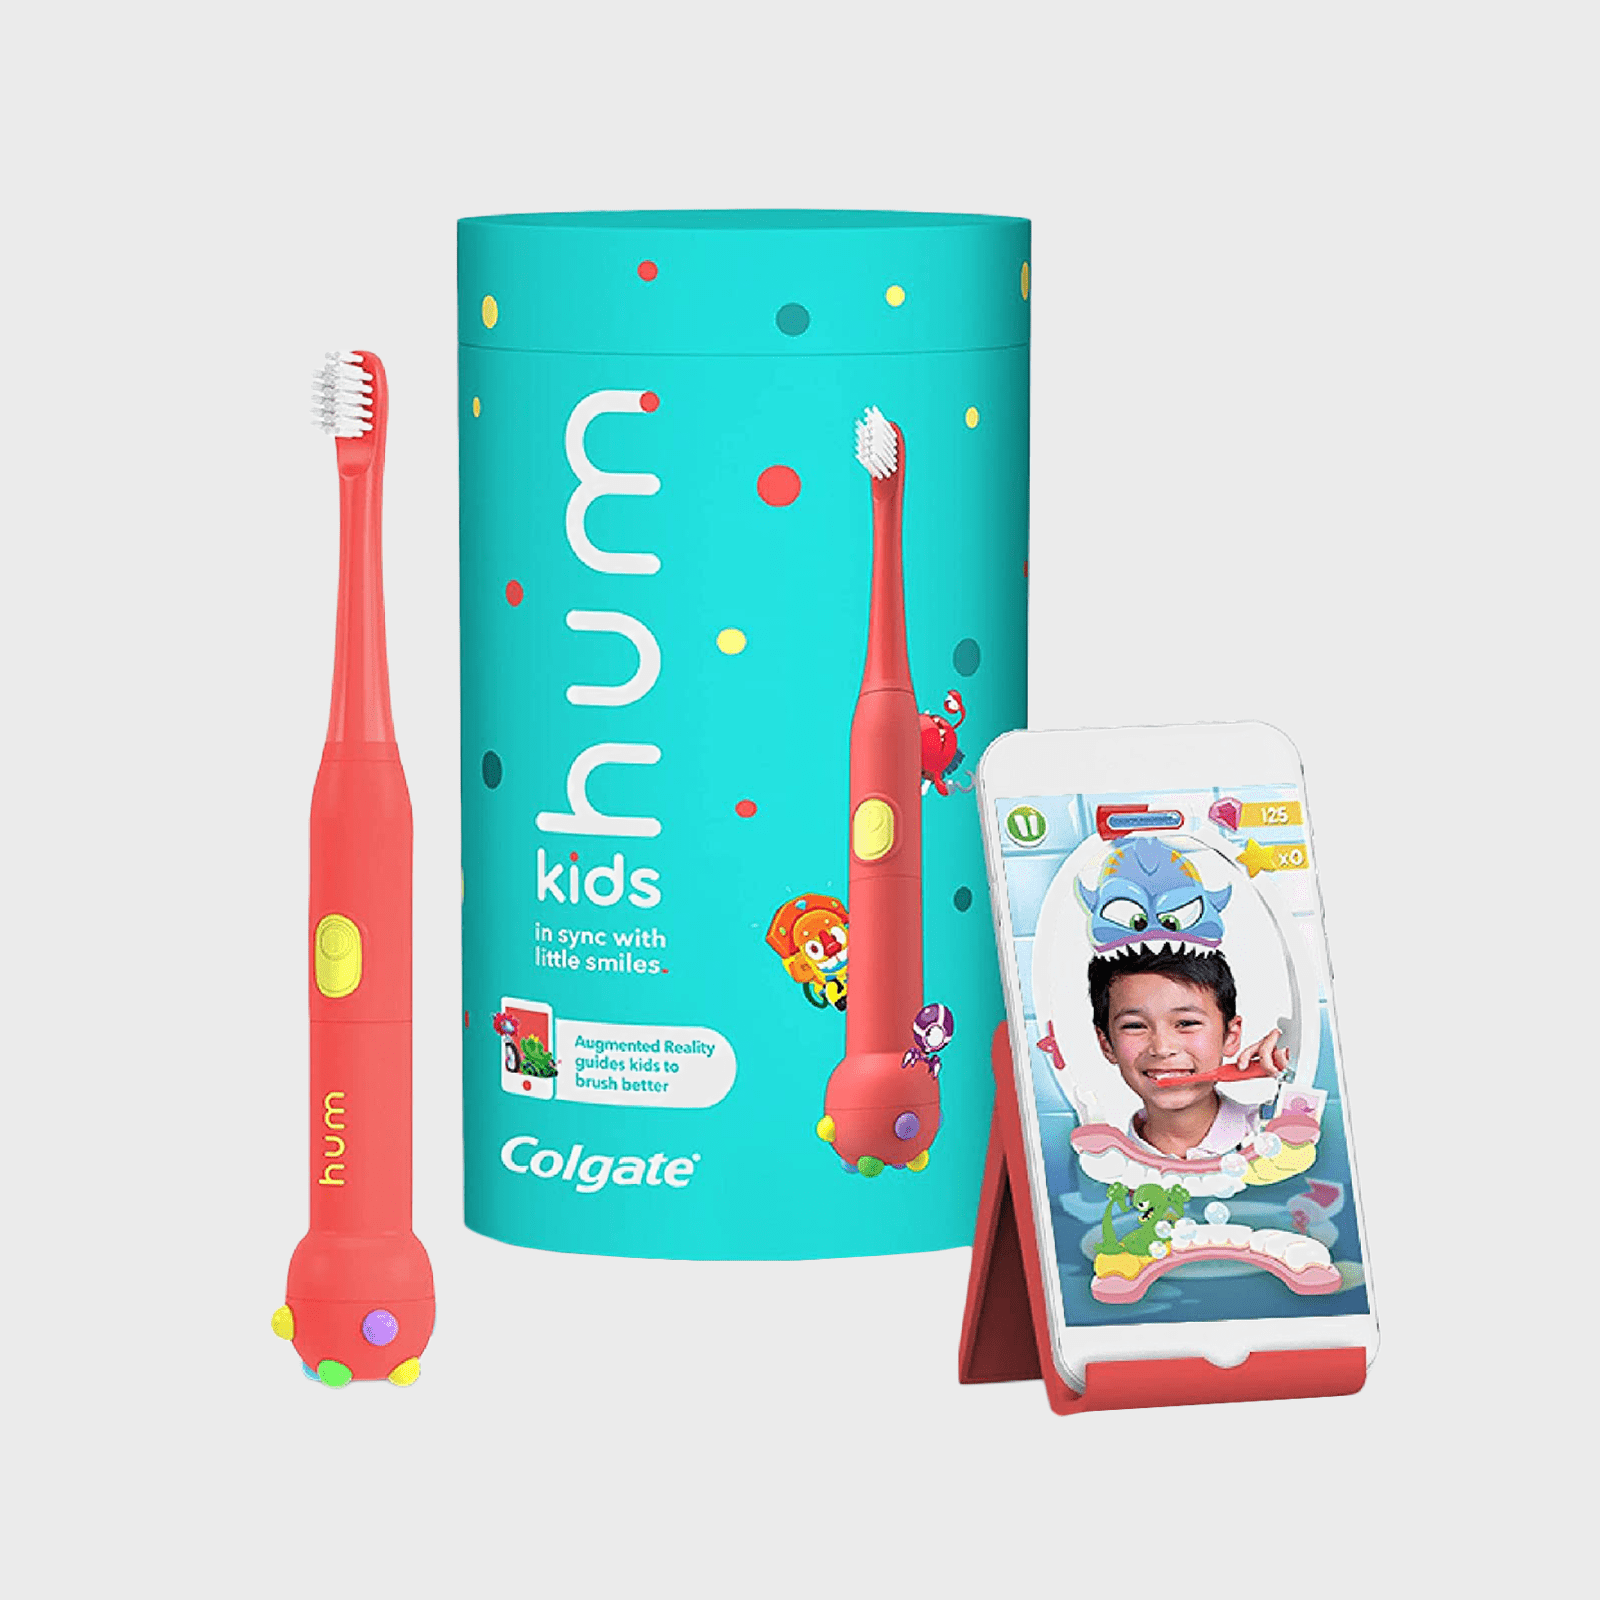 Colgate Hum Kids Attery Toothbrush Ecomm Via Amazon.com